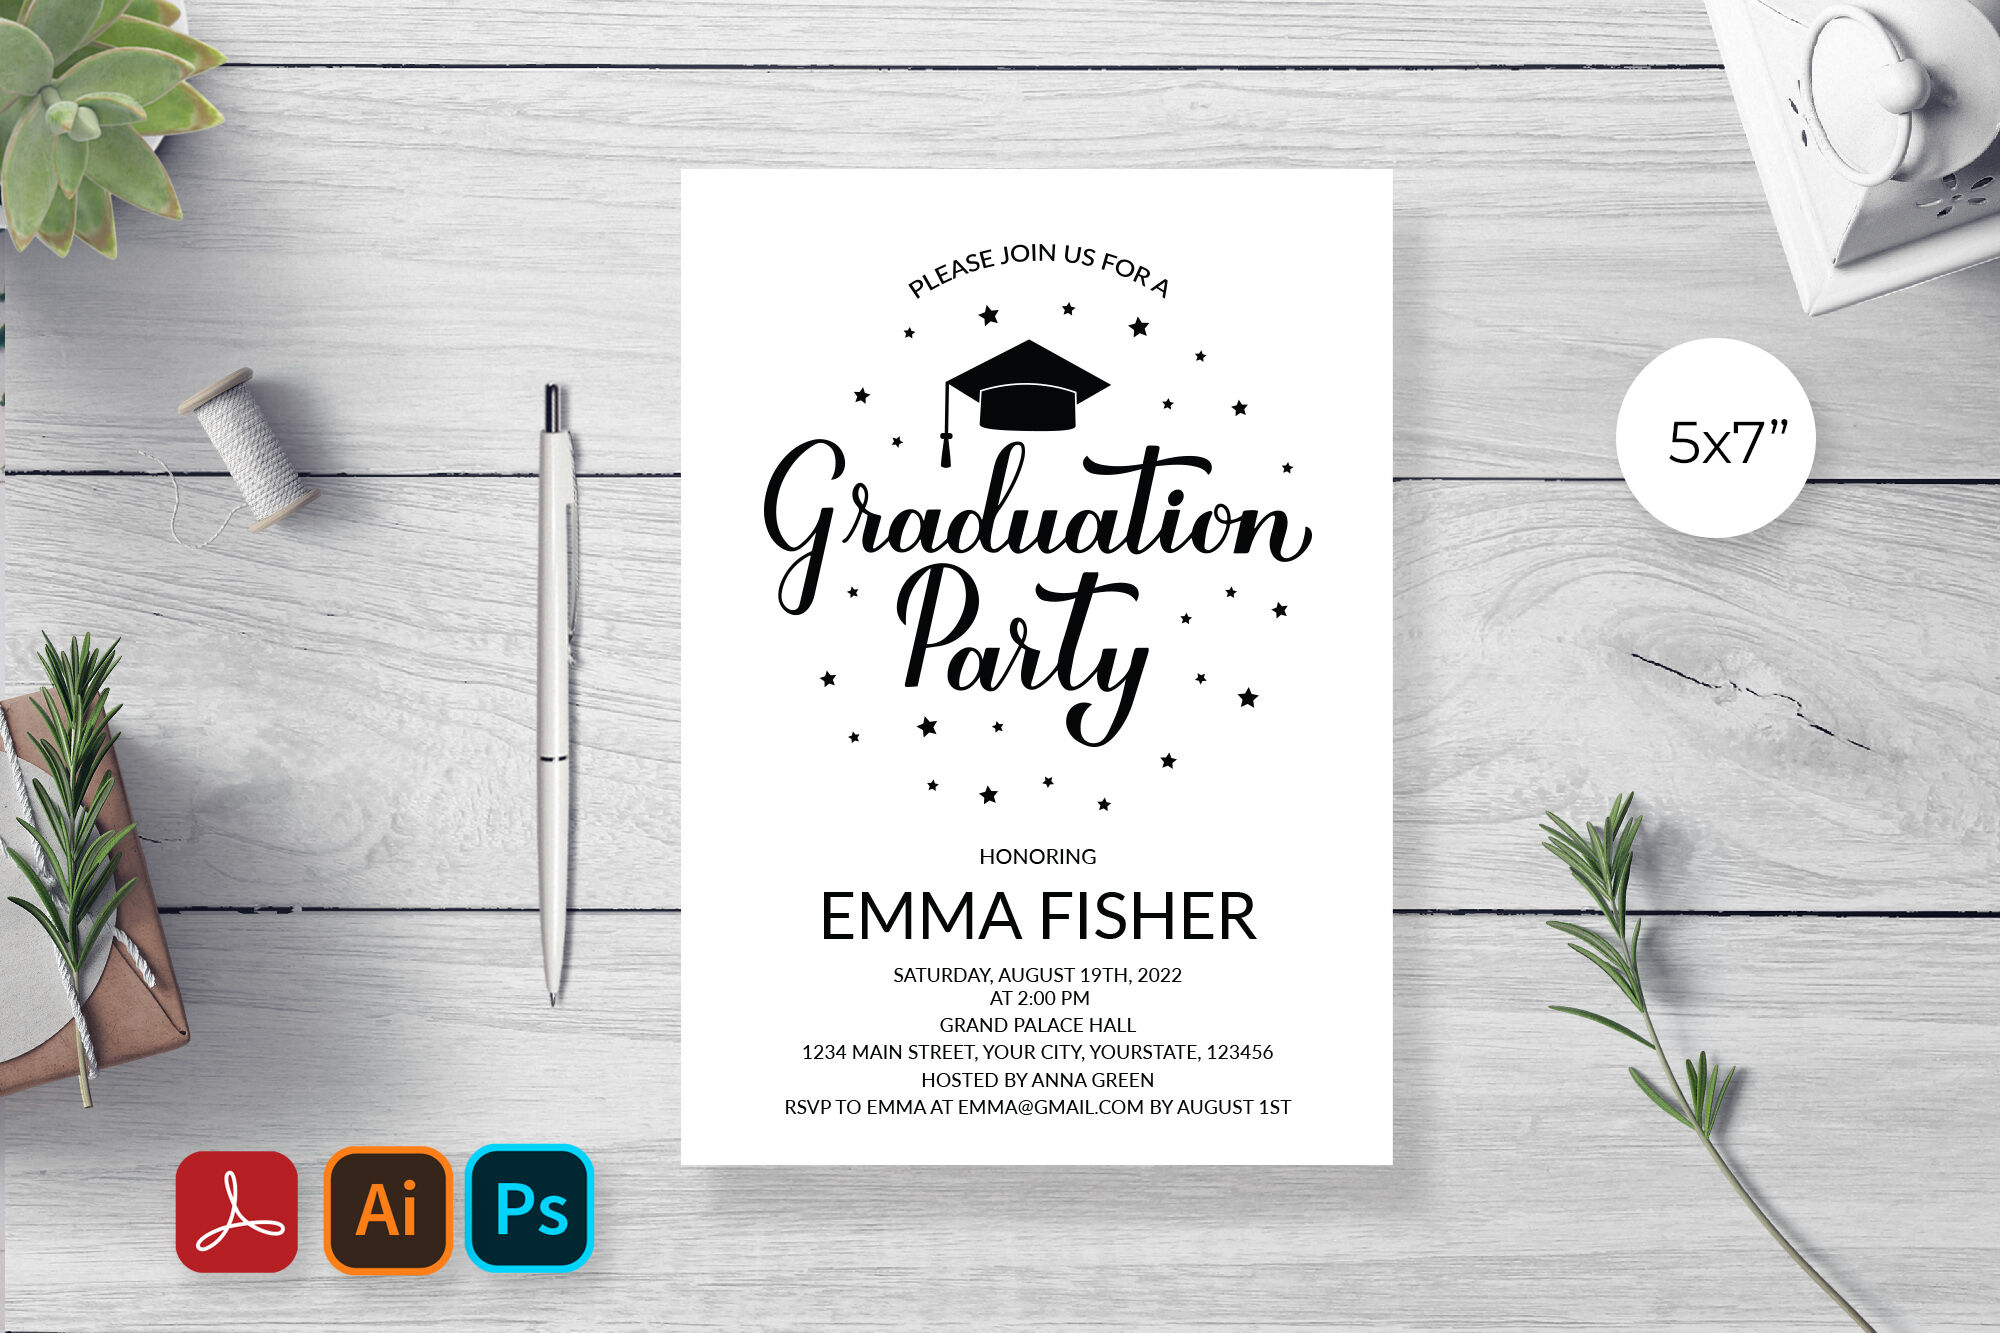 printable graduation party invitations templates